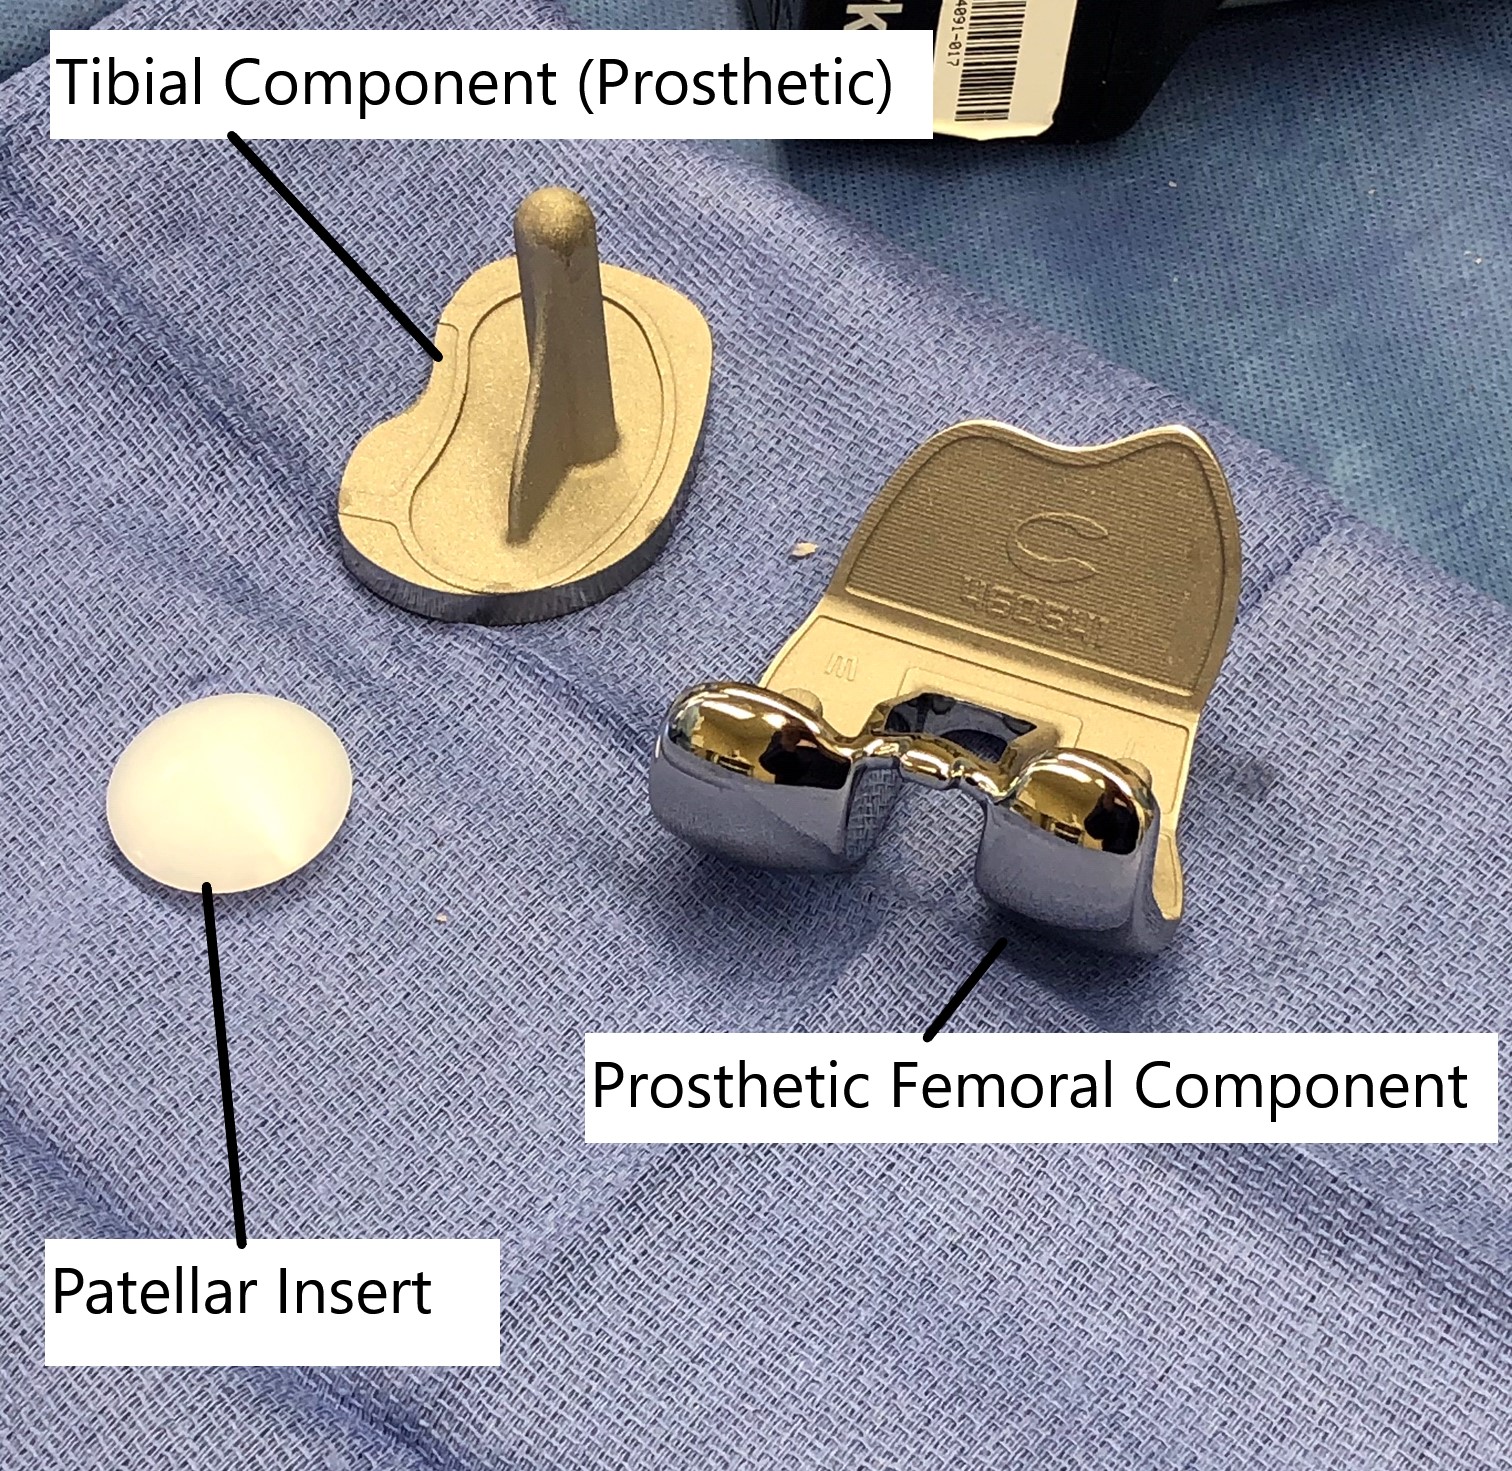 Knee arthroplasty implants